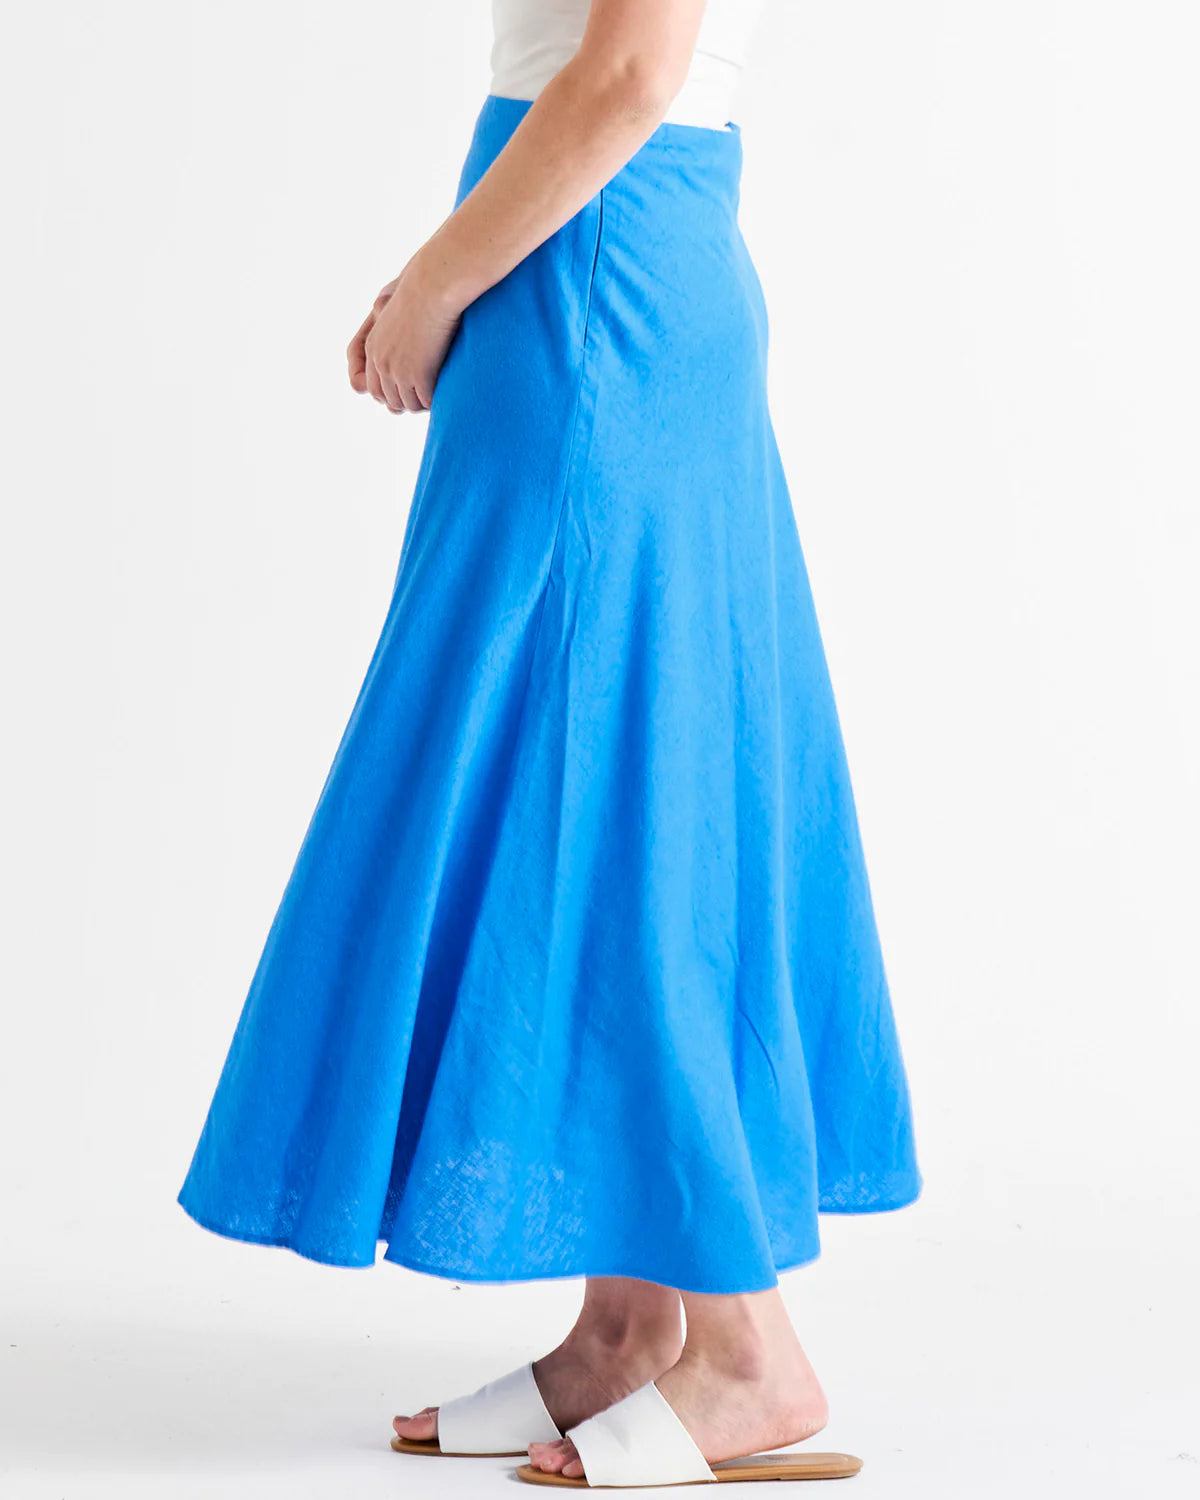 Betty Basics Saffron Skirt - Electric Blue